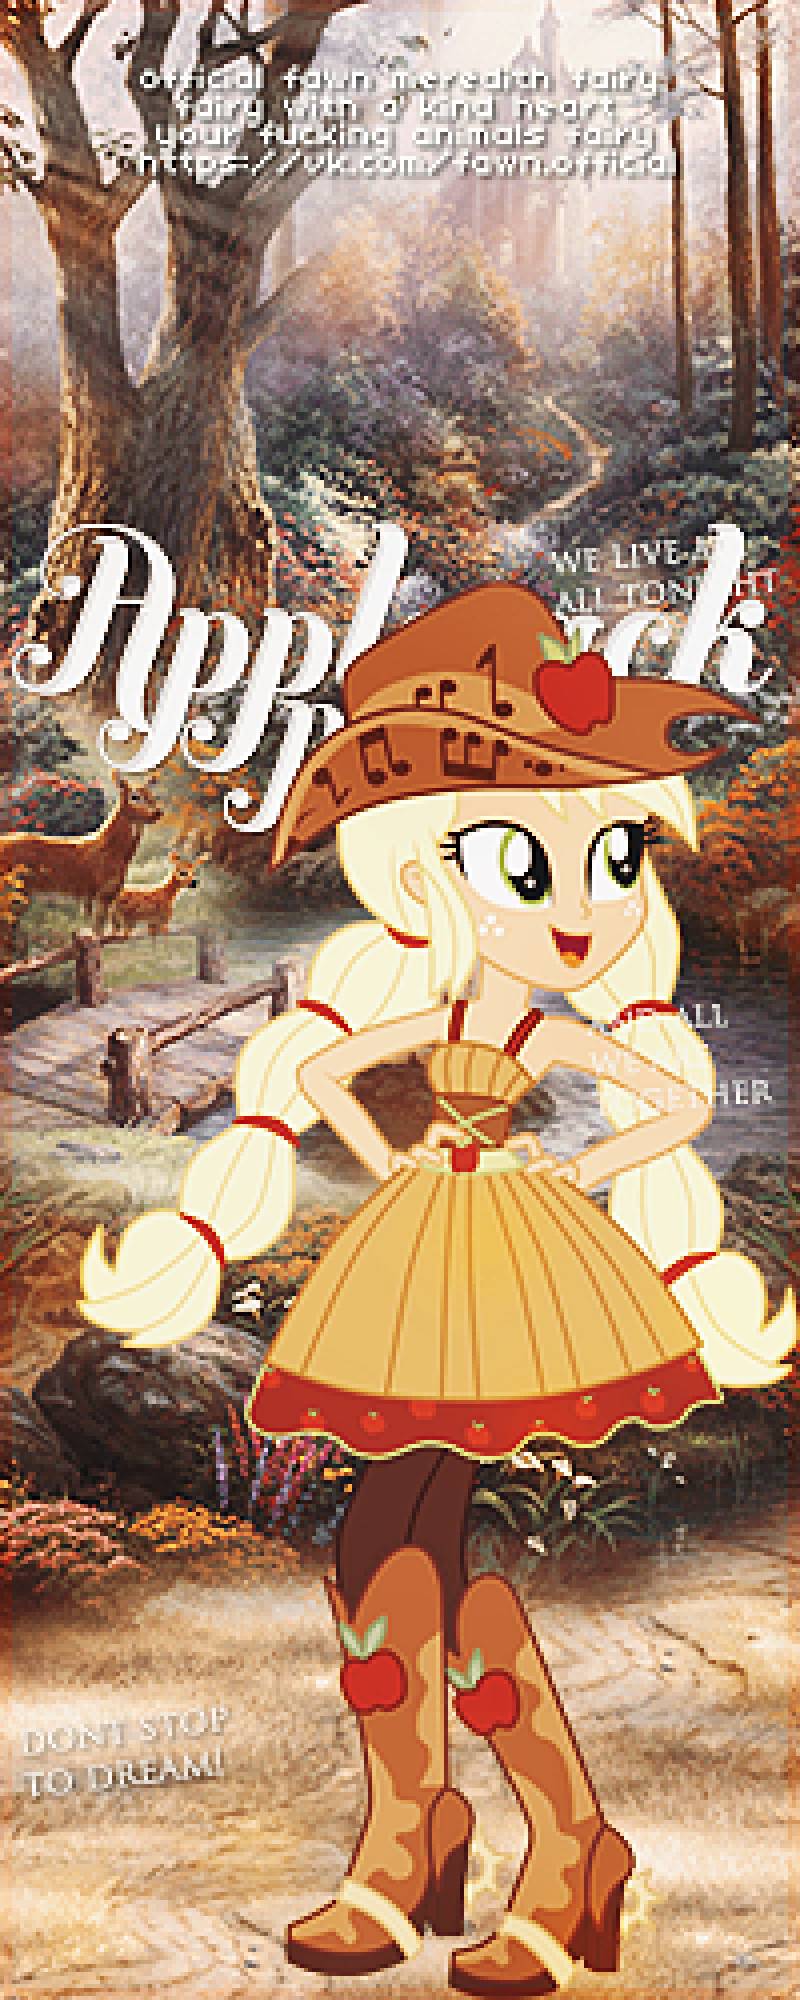 Applejack Pony